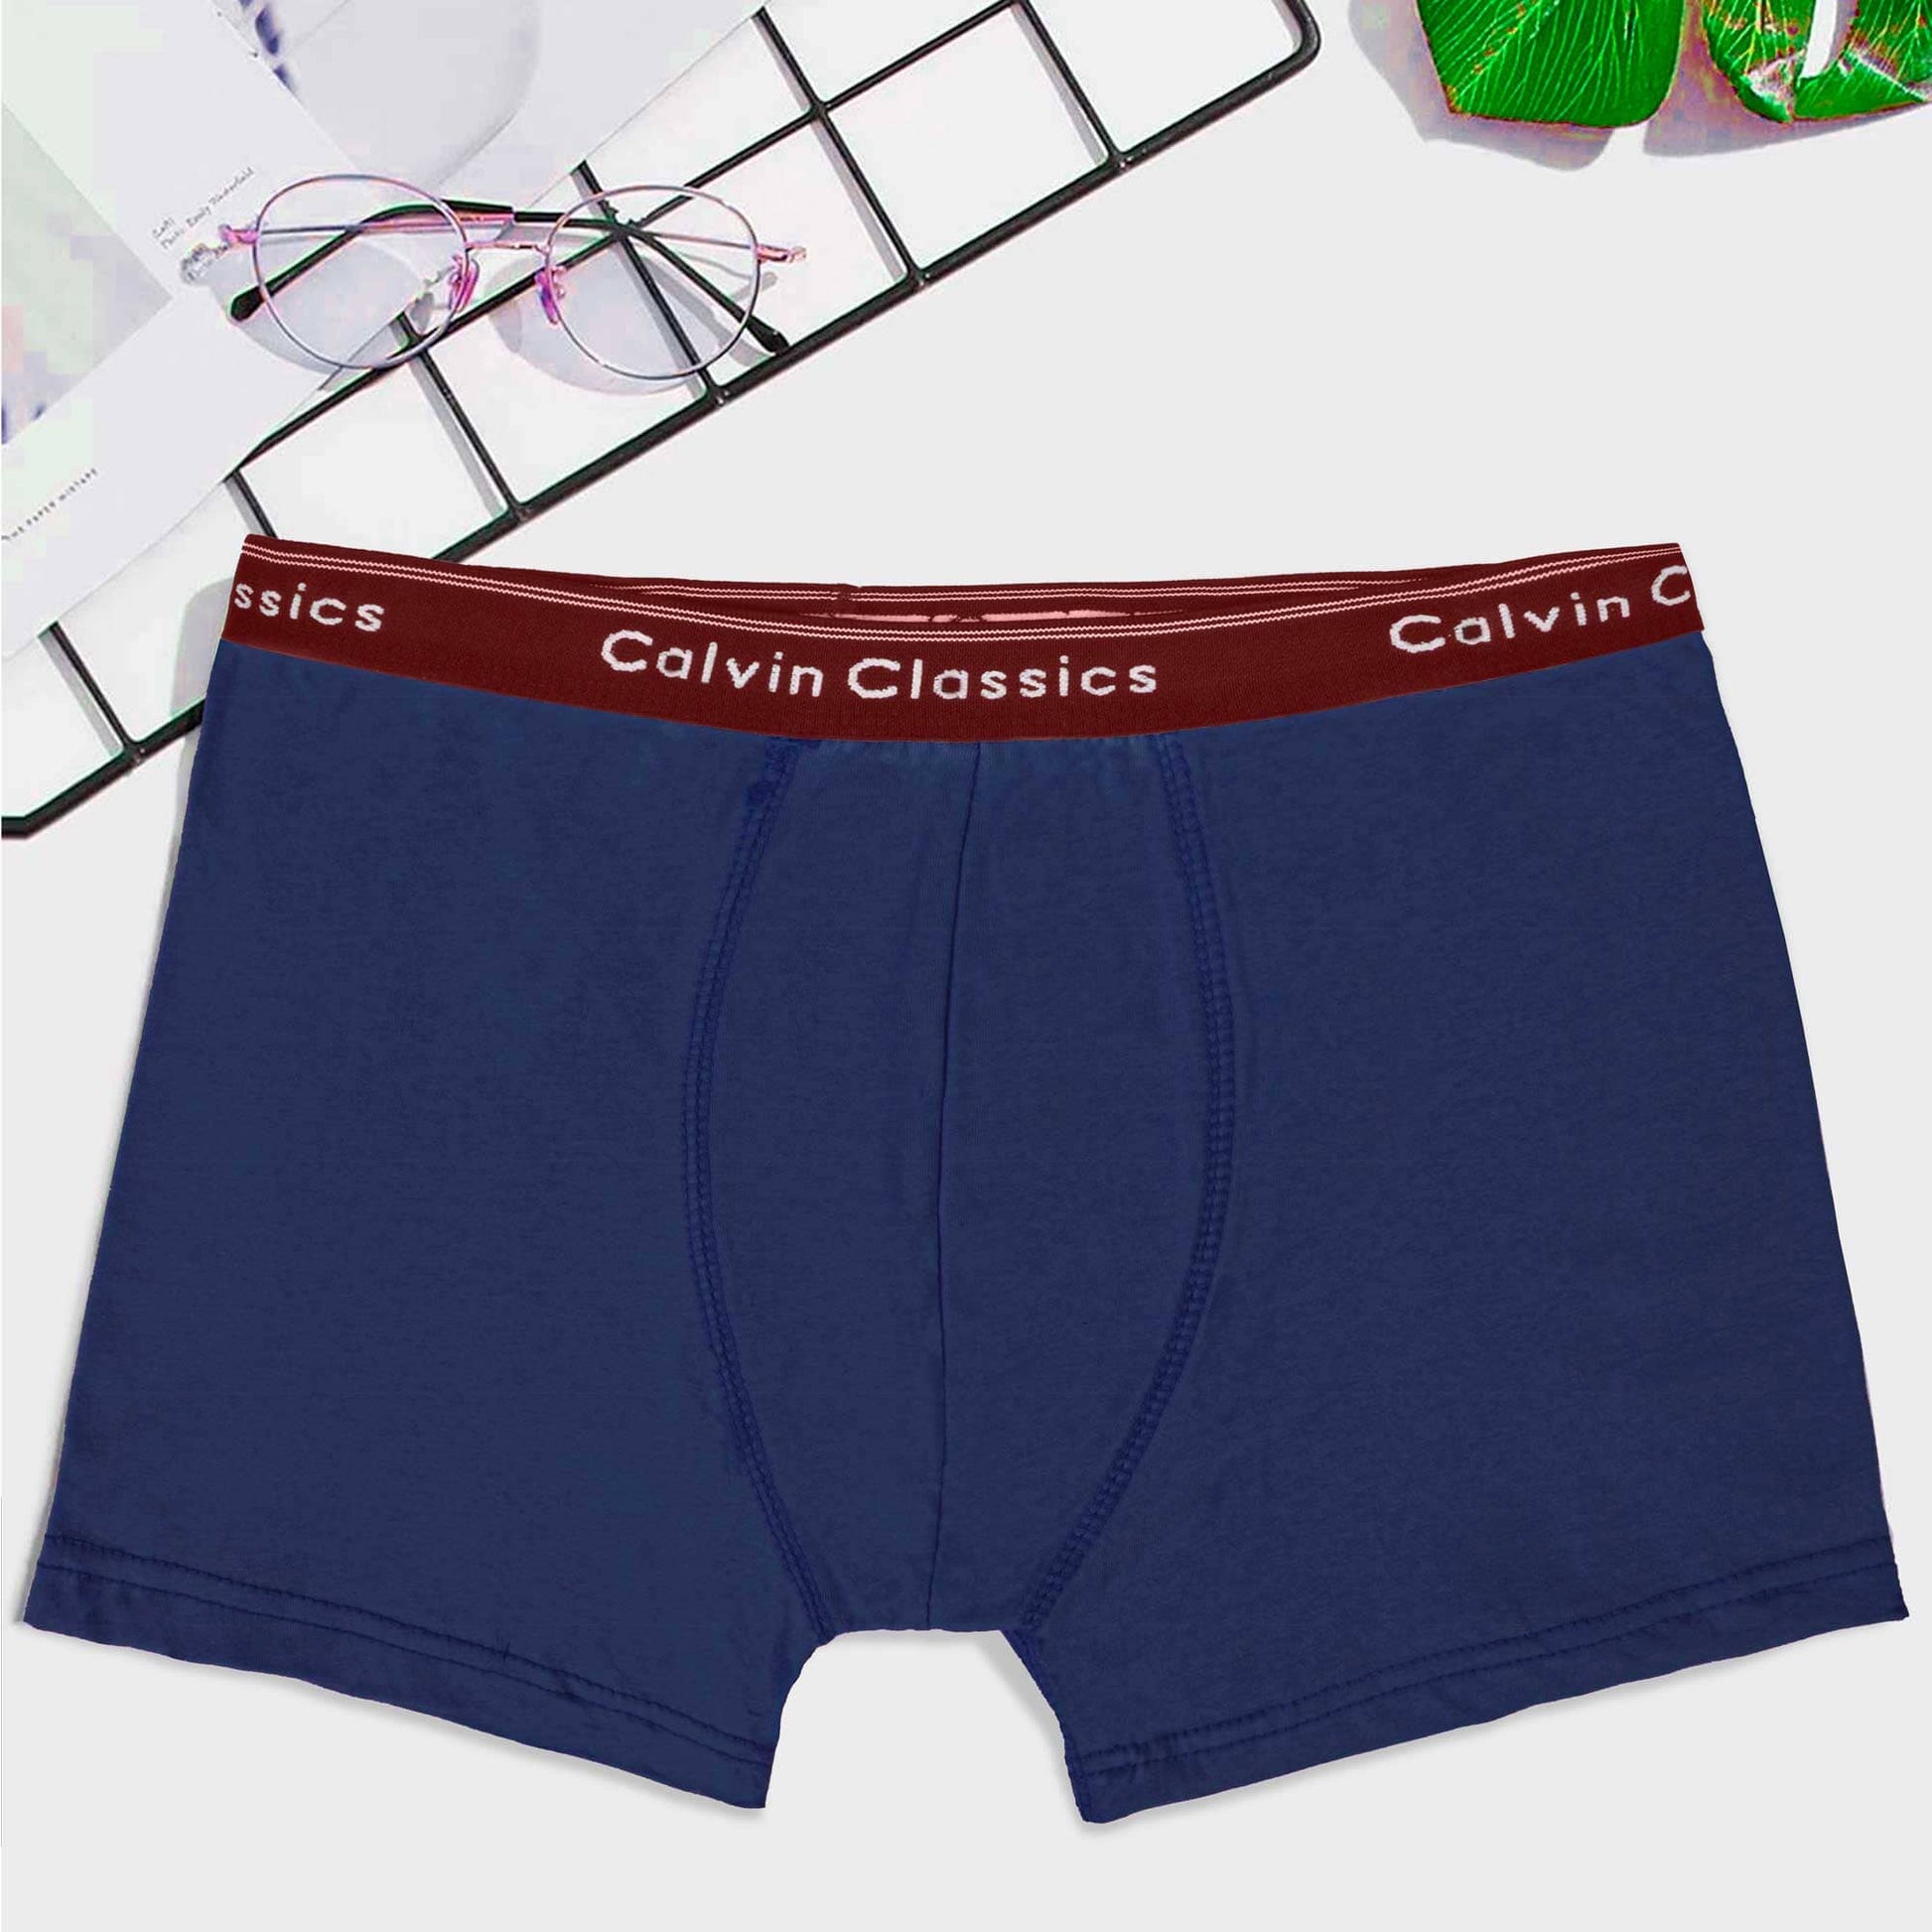 Calvin Classic Men's Boxer Shorts Men's Underwear SZK Light Navy S 